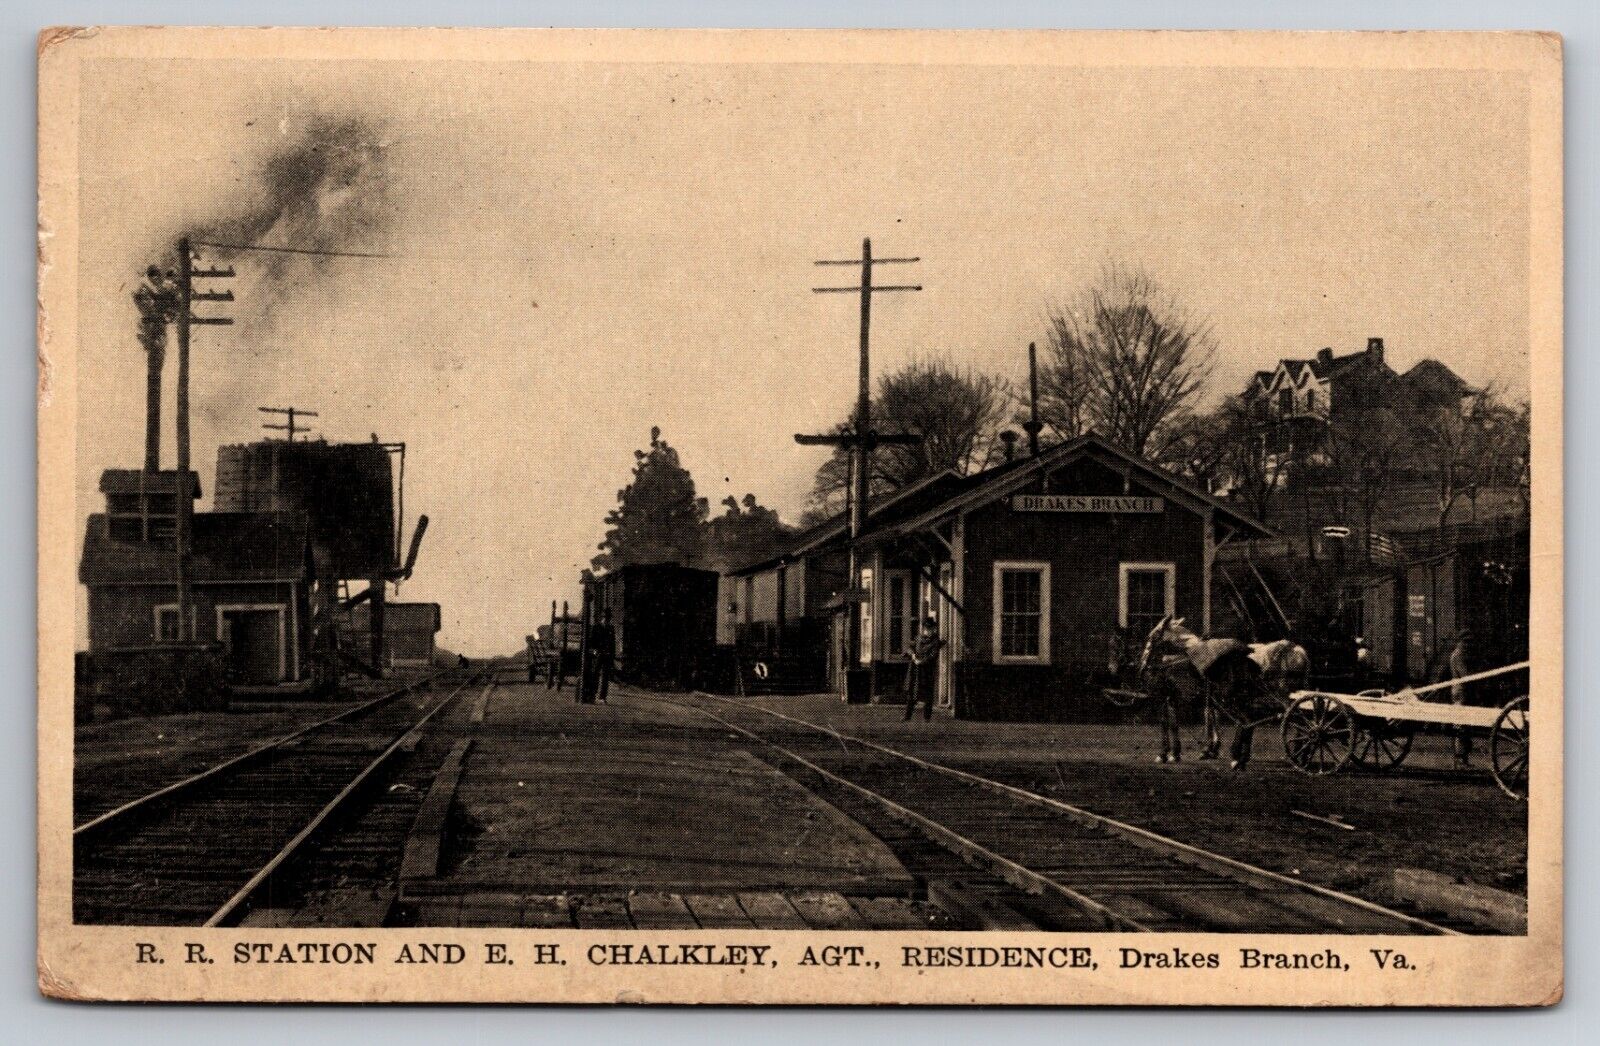 Railroad Depot Station Drakes Branch Virginia Chalkley Residence c1915 Postcard